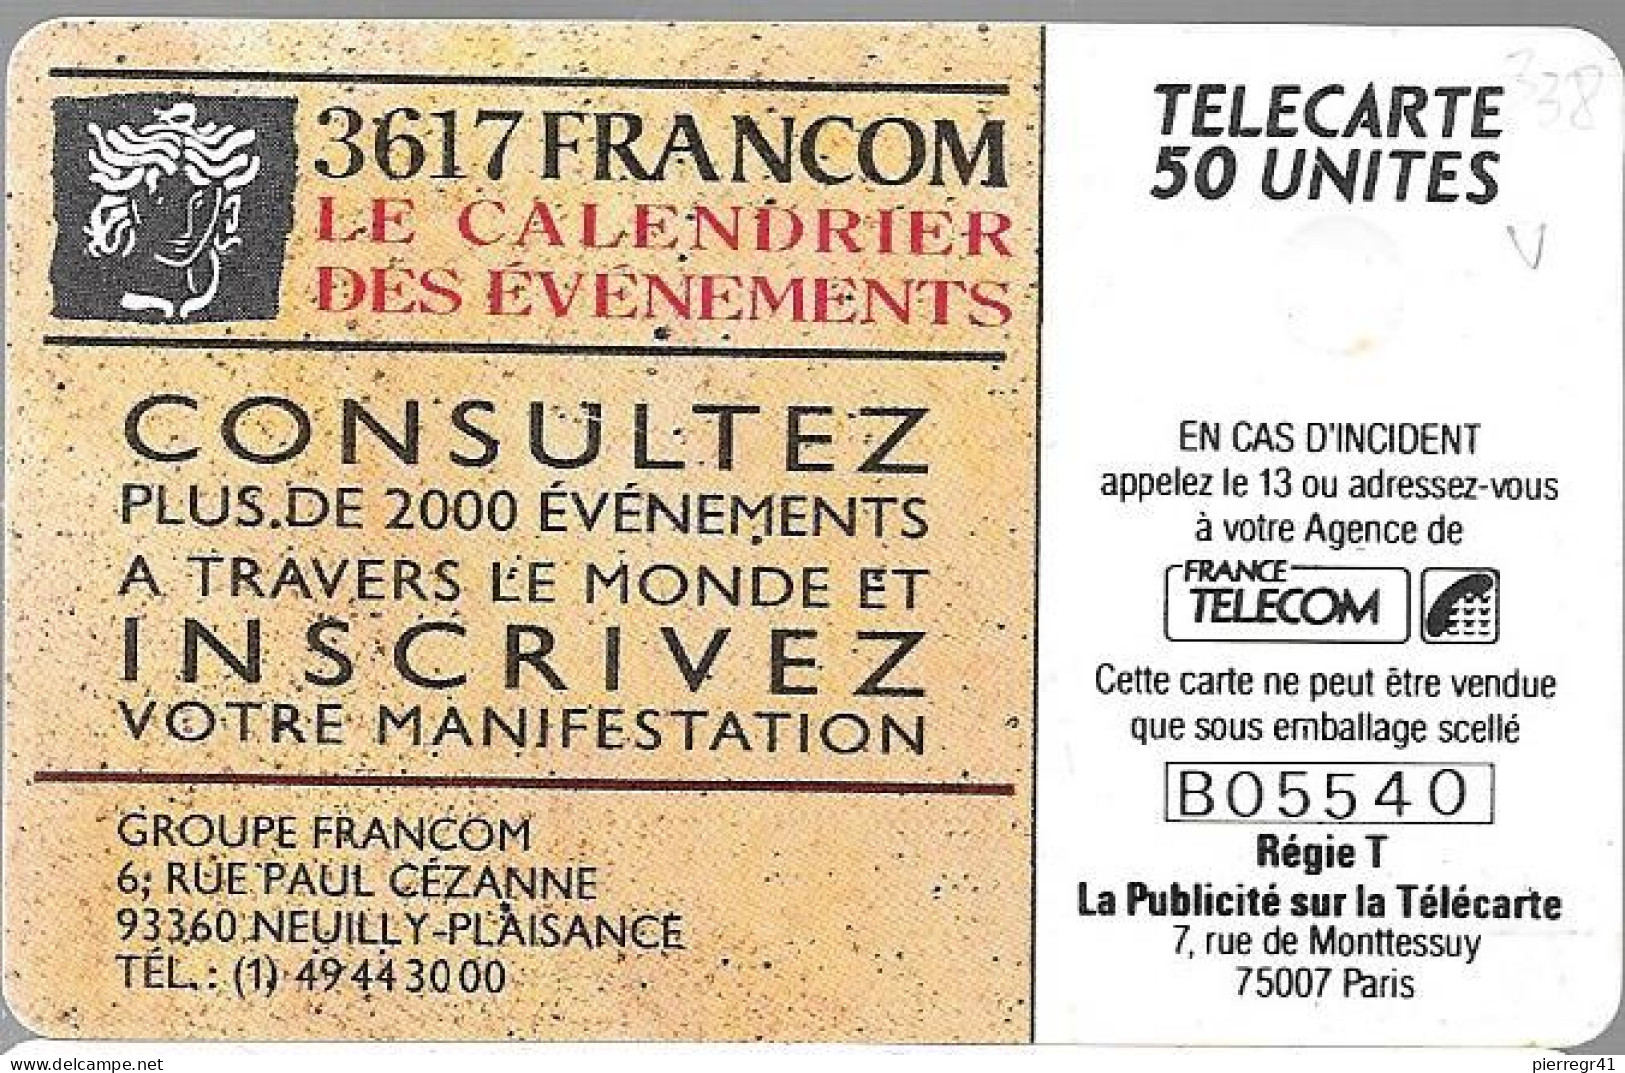 CARTE-PRIVEE-1990-D338-02/91-GEMA-3617 FRANCOM-Minitel Evénements-1000ex-R° Laqué-Utilisé-TBE/LUXE - Privadas